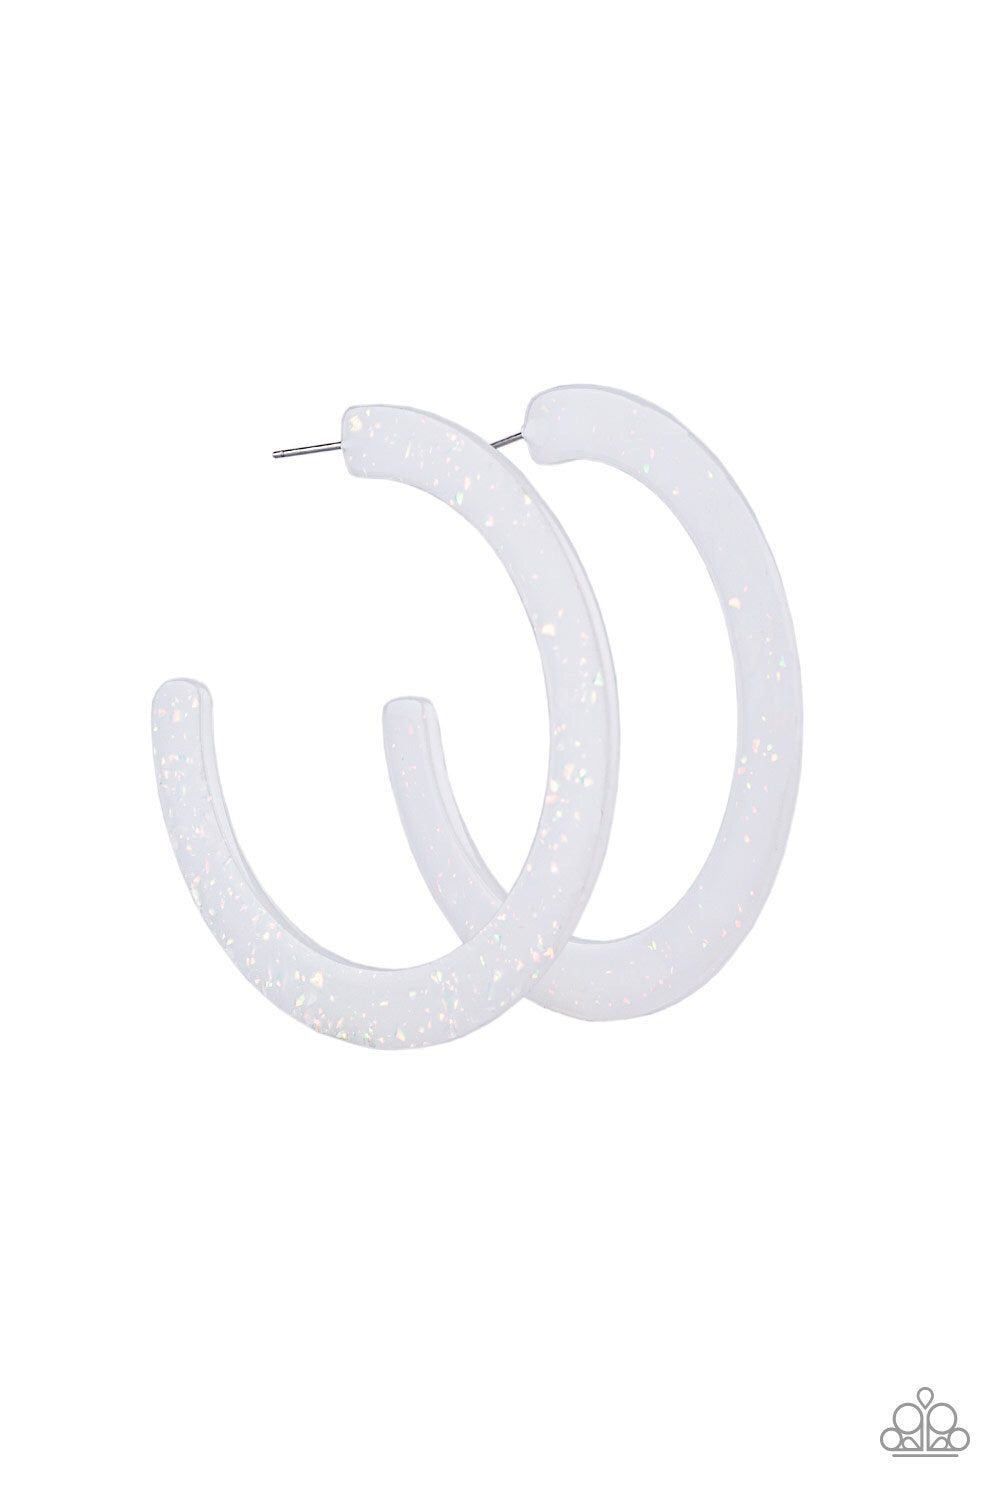 HAUTE Tamale White-Earrings